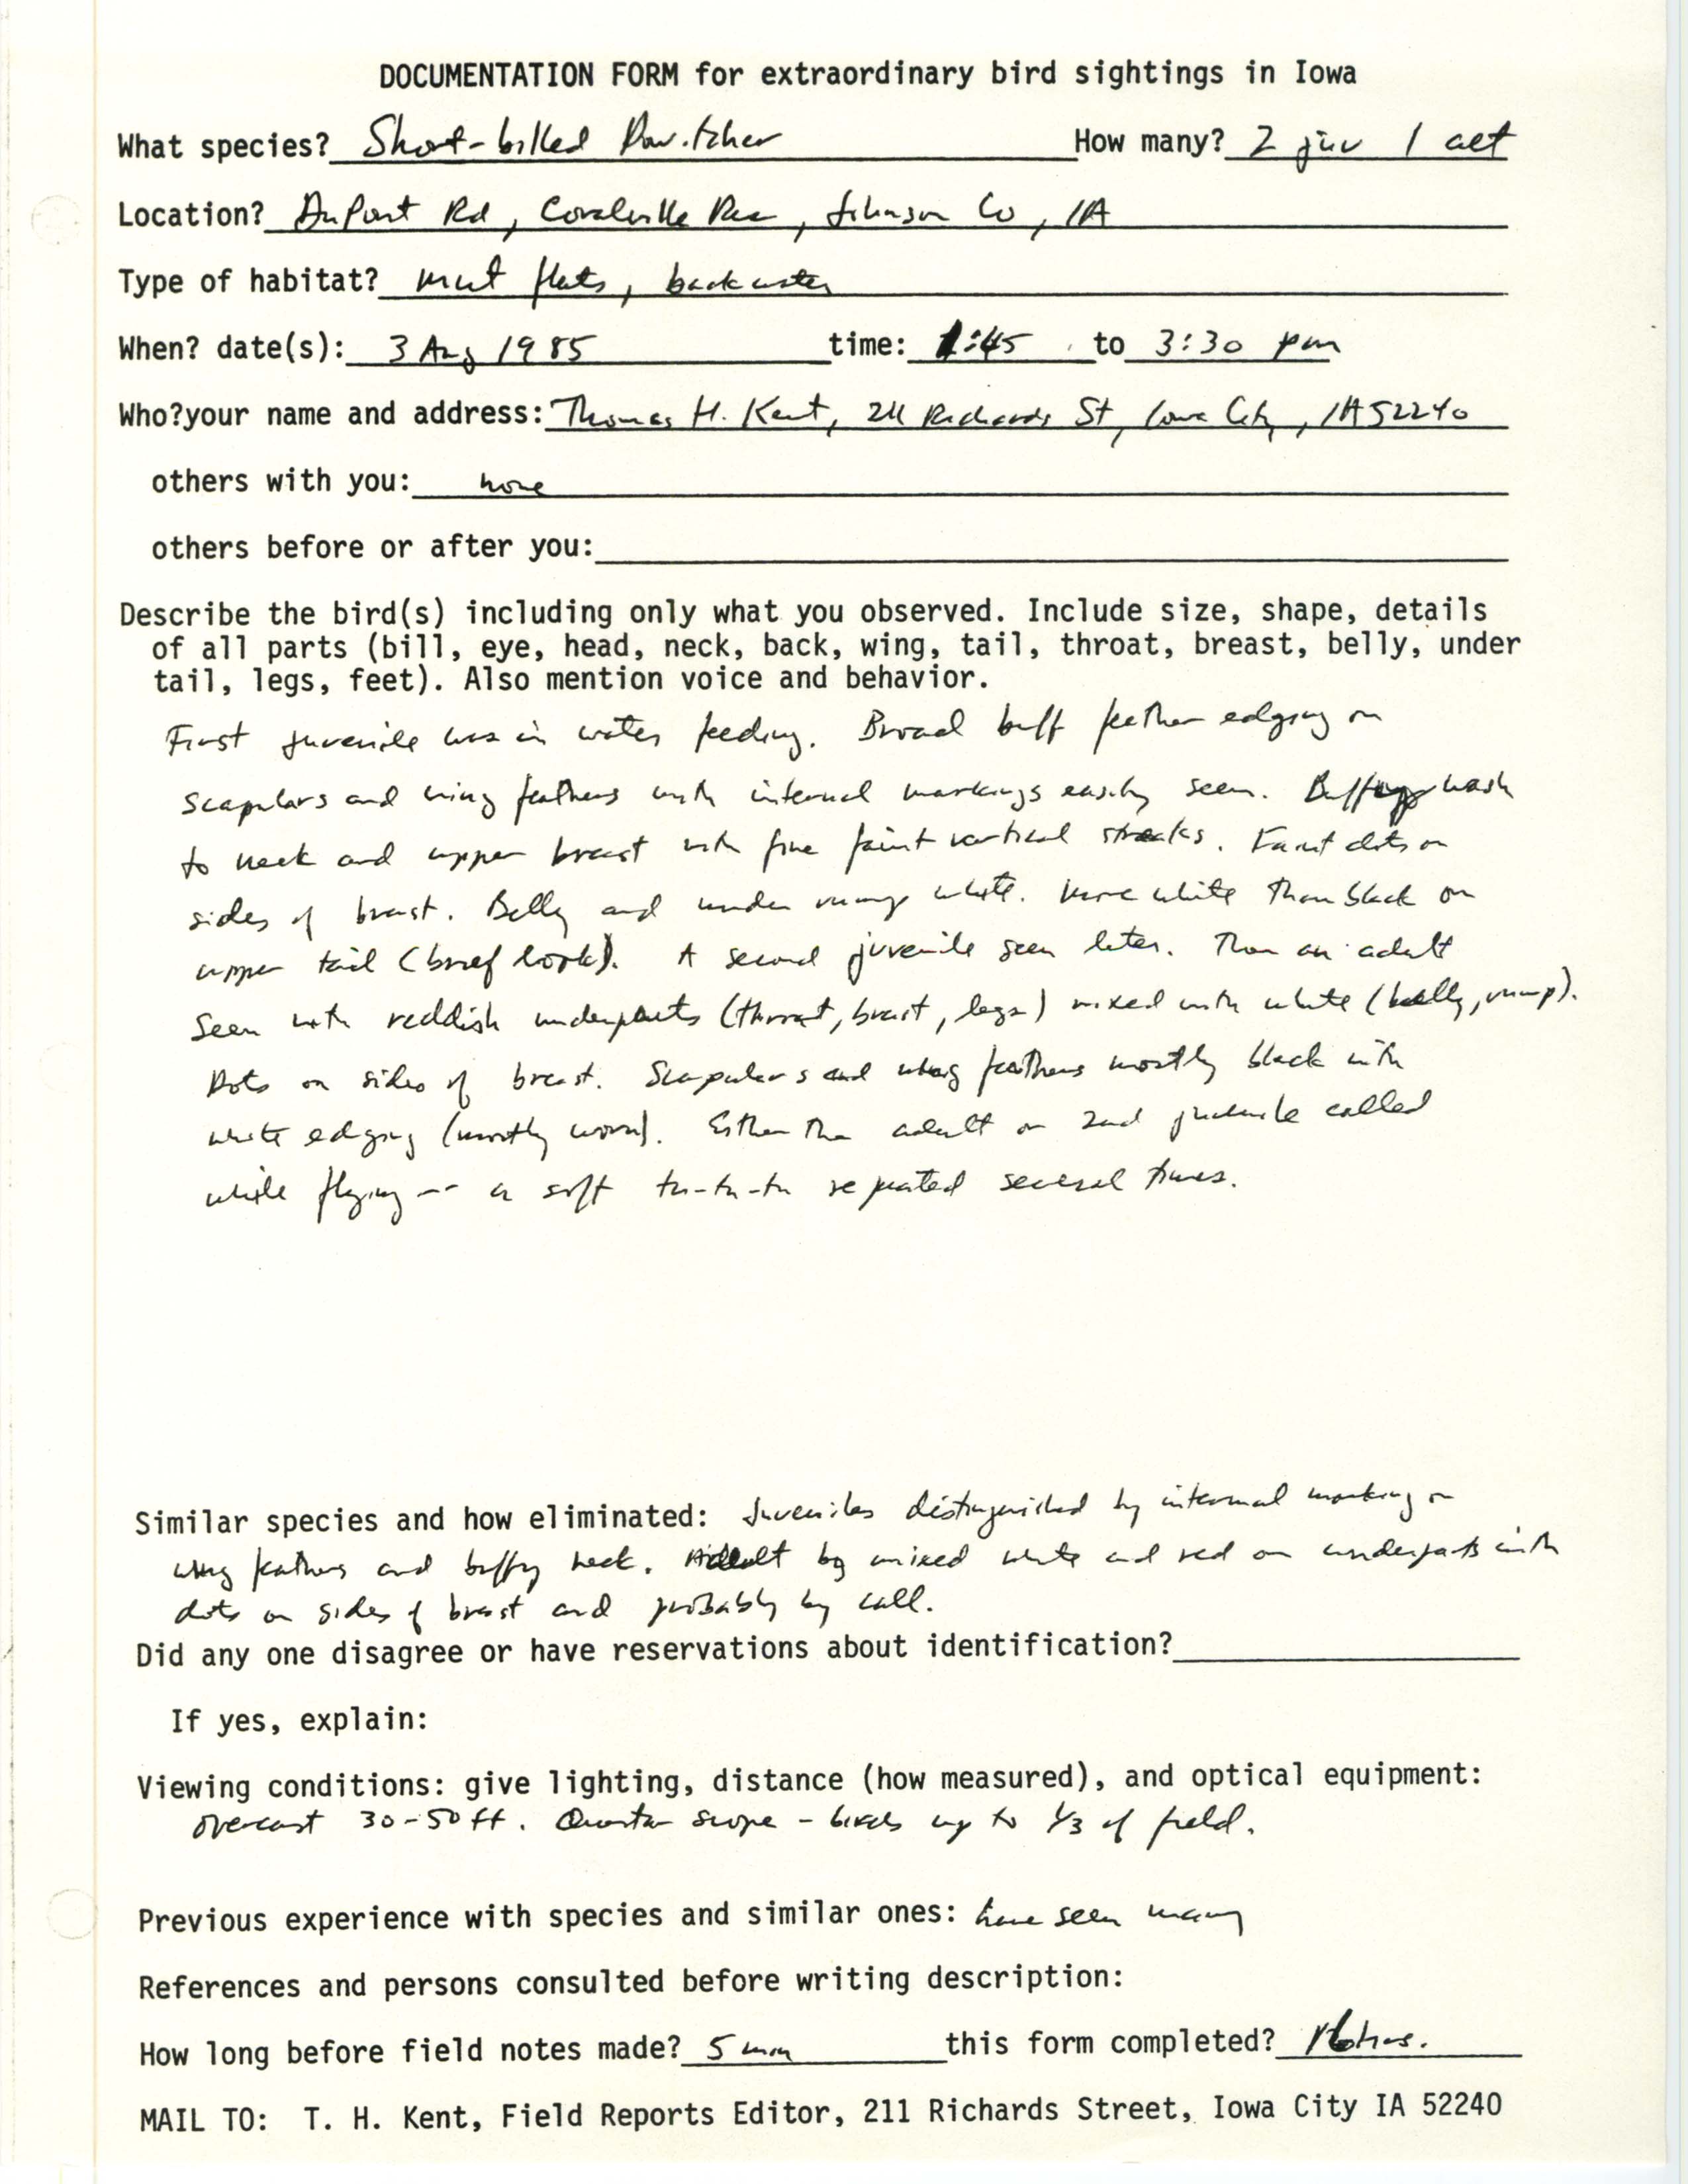 Rare bird documentation form for Short-billed Dowitcher at Coralville Reservoir, 1985